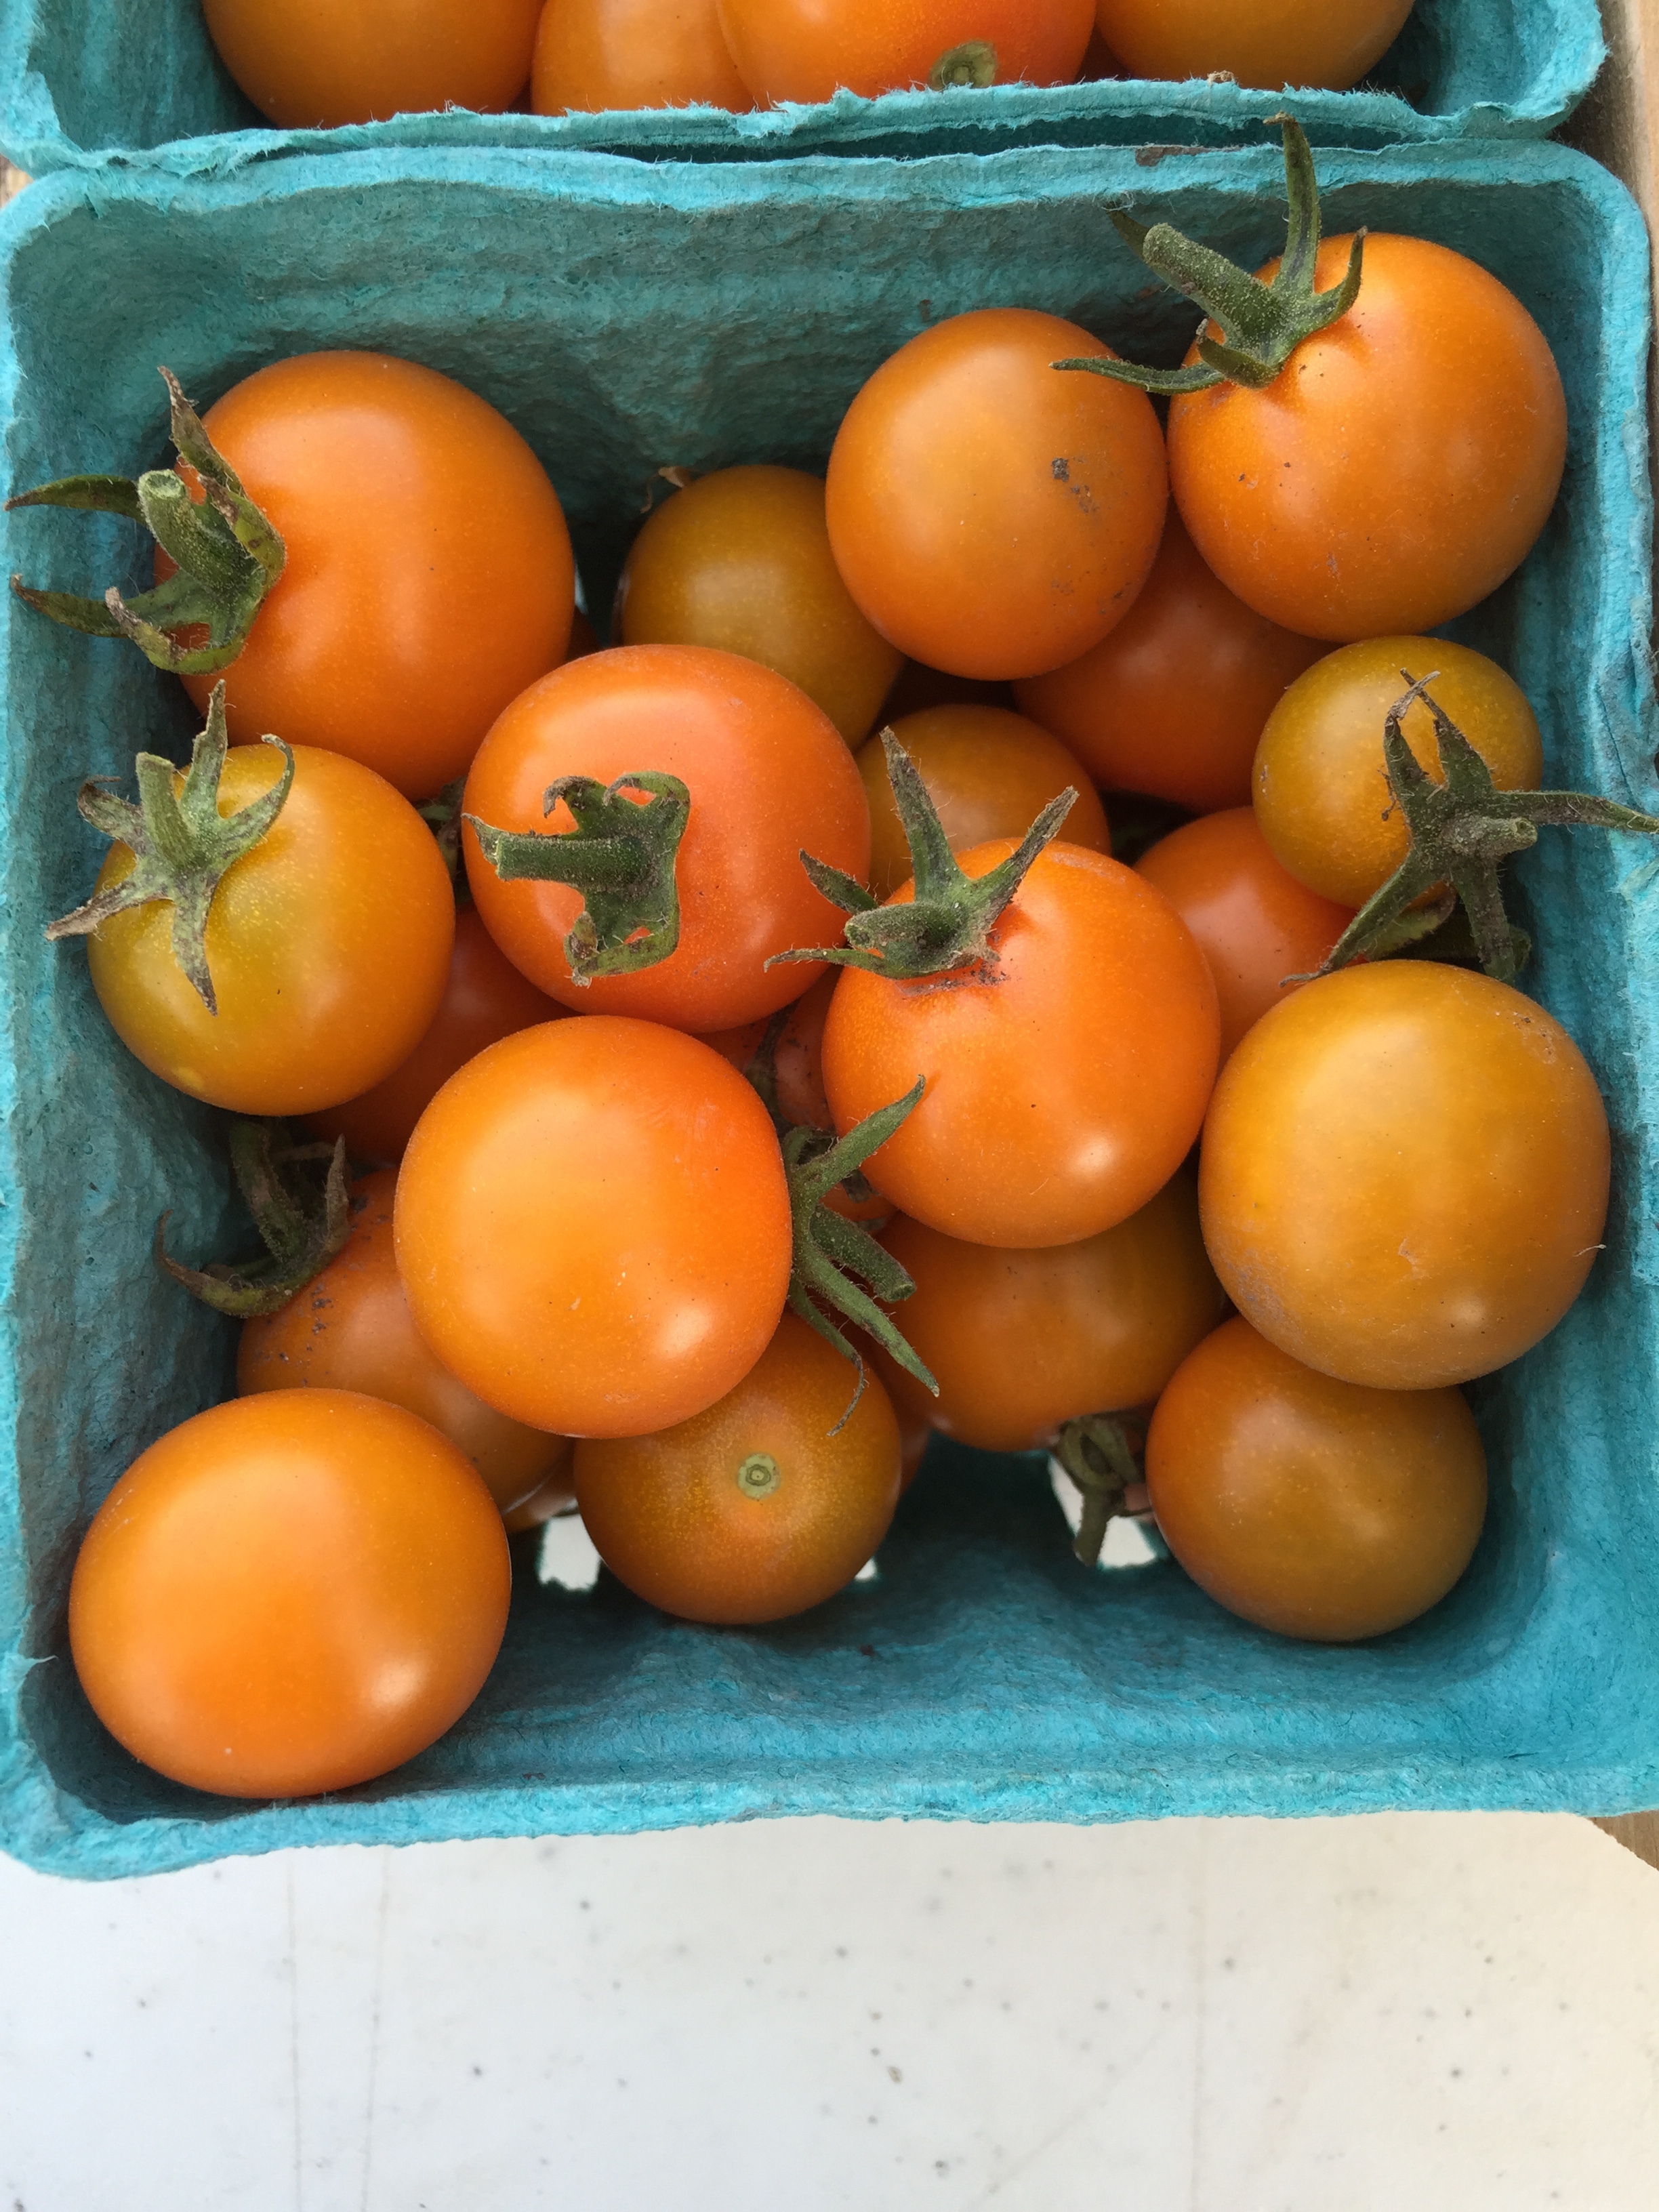  "Sun Gold" cherry tomatoes 